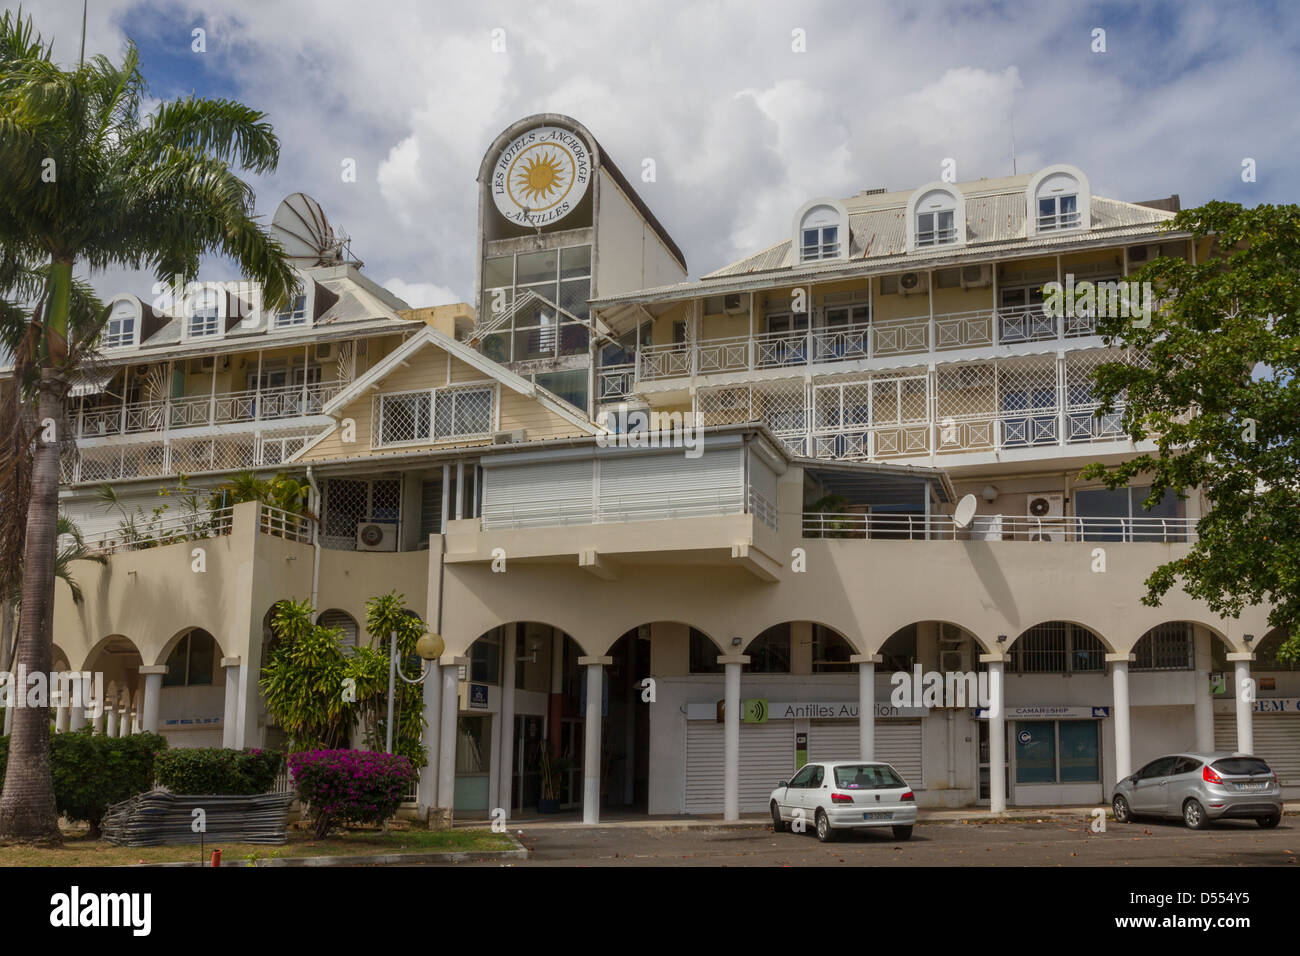 Guadeloupe Pointe-à-Pitre, Anchorage Antillen Hotels Stockfoto